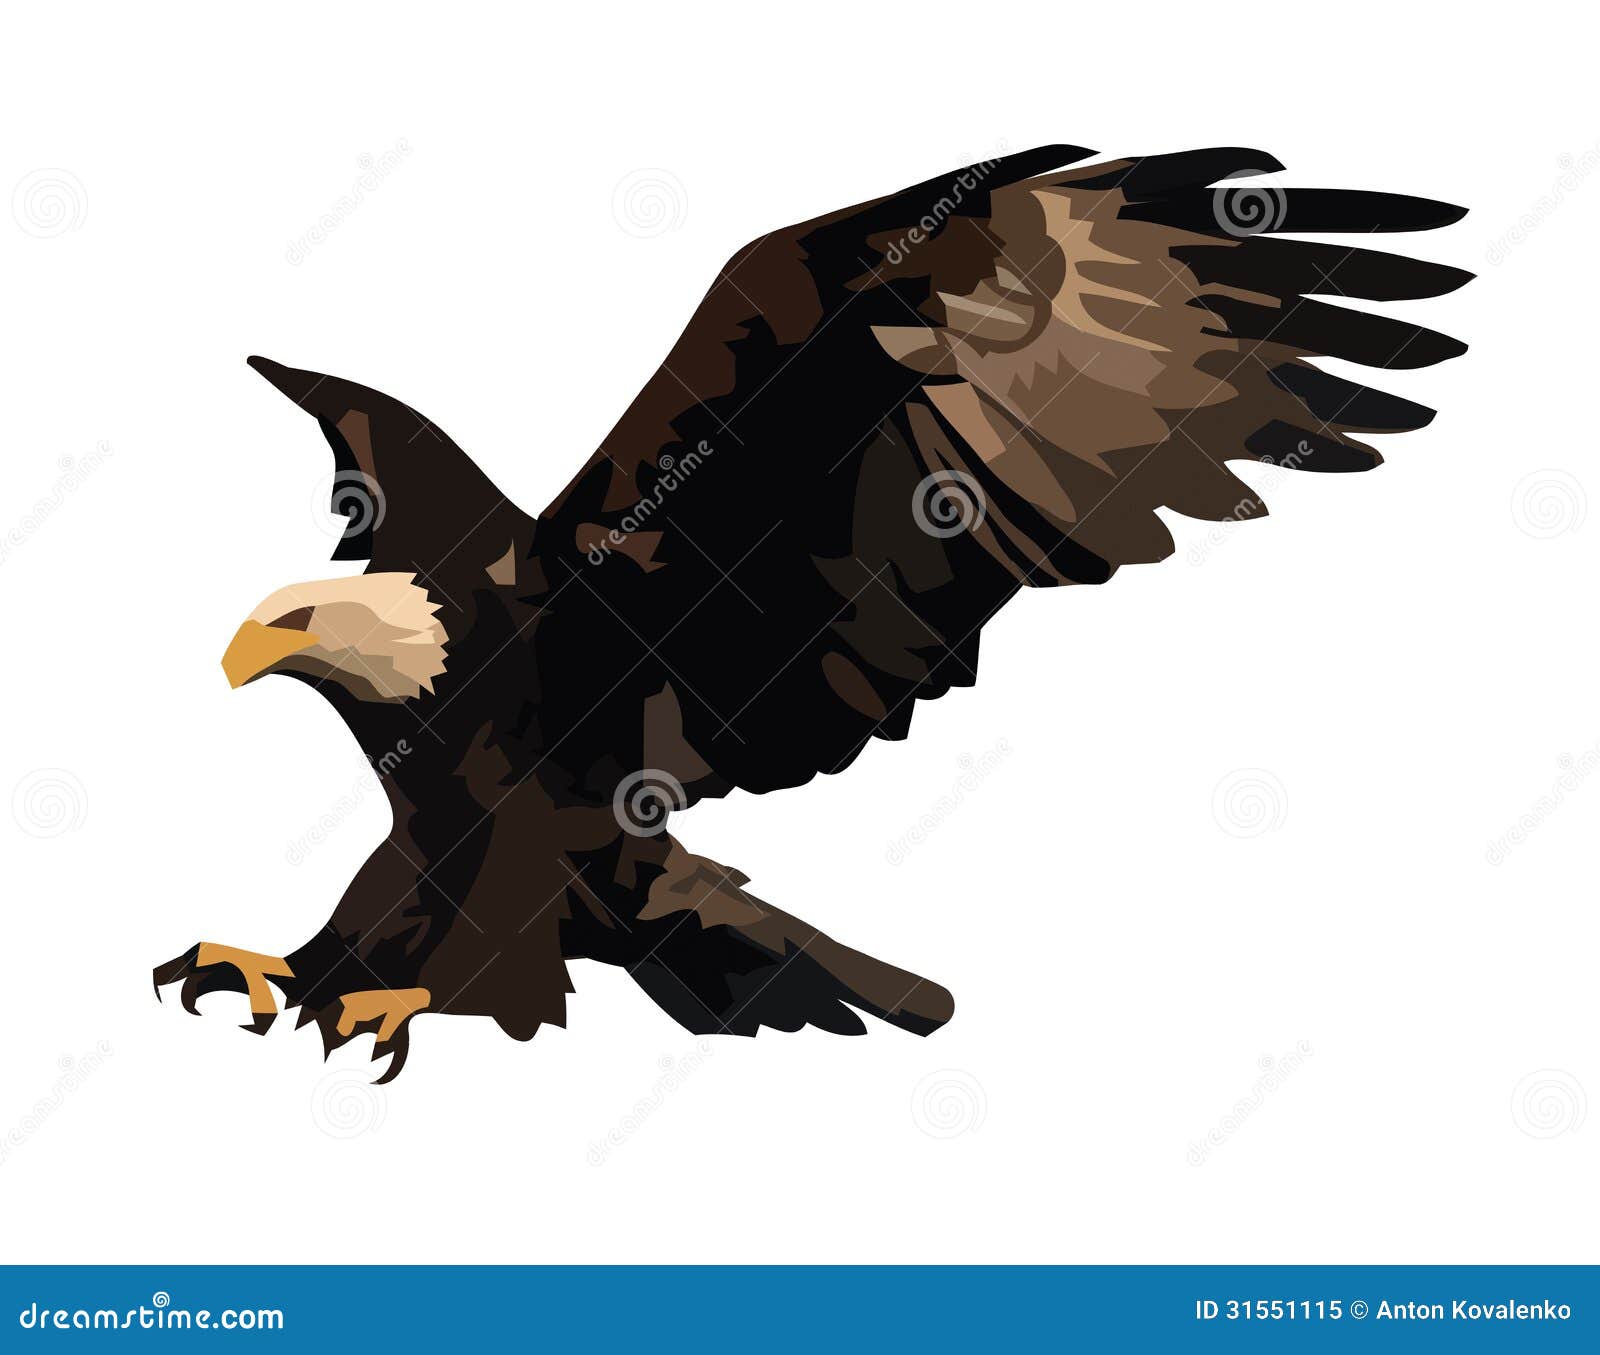 eagle landing clip art - photo #4